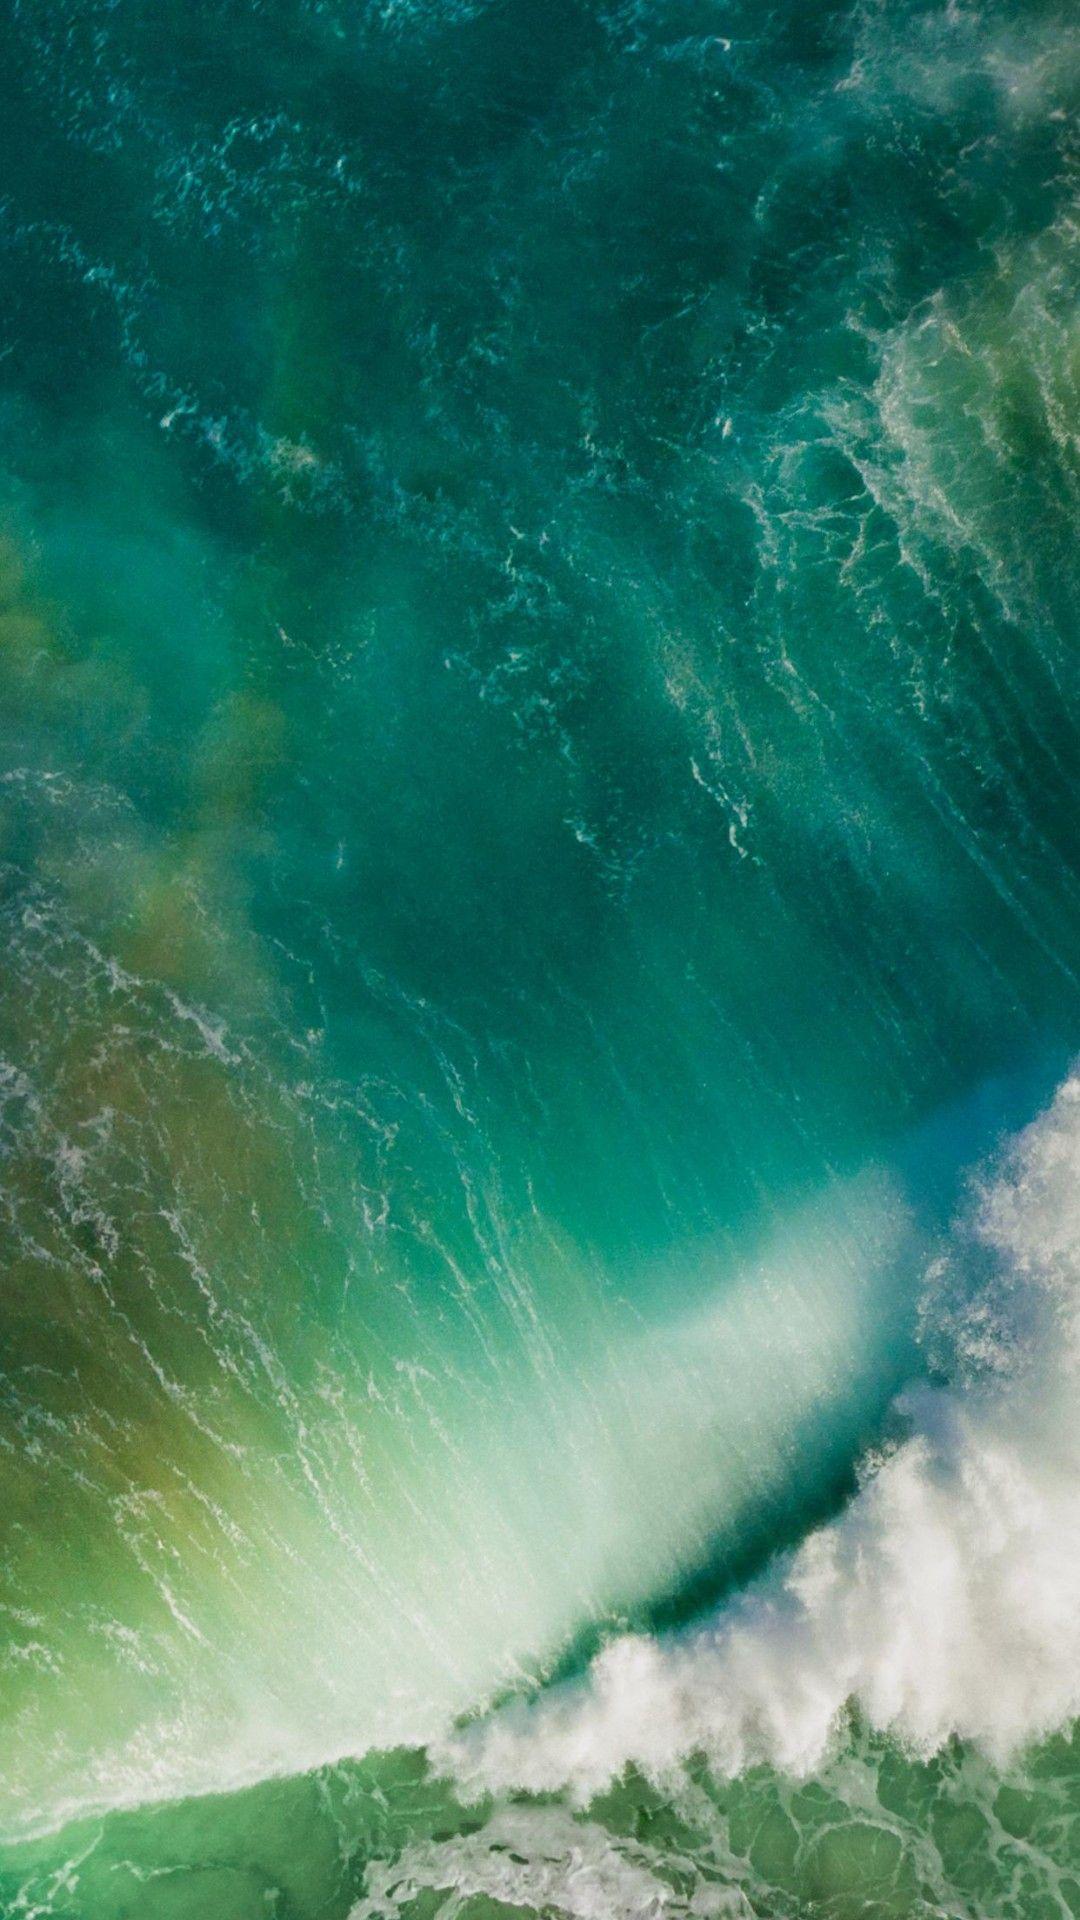 Sea green wallpaper. Resimler, Manzara, Elma duvar kağıdı